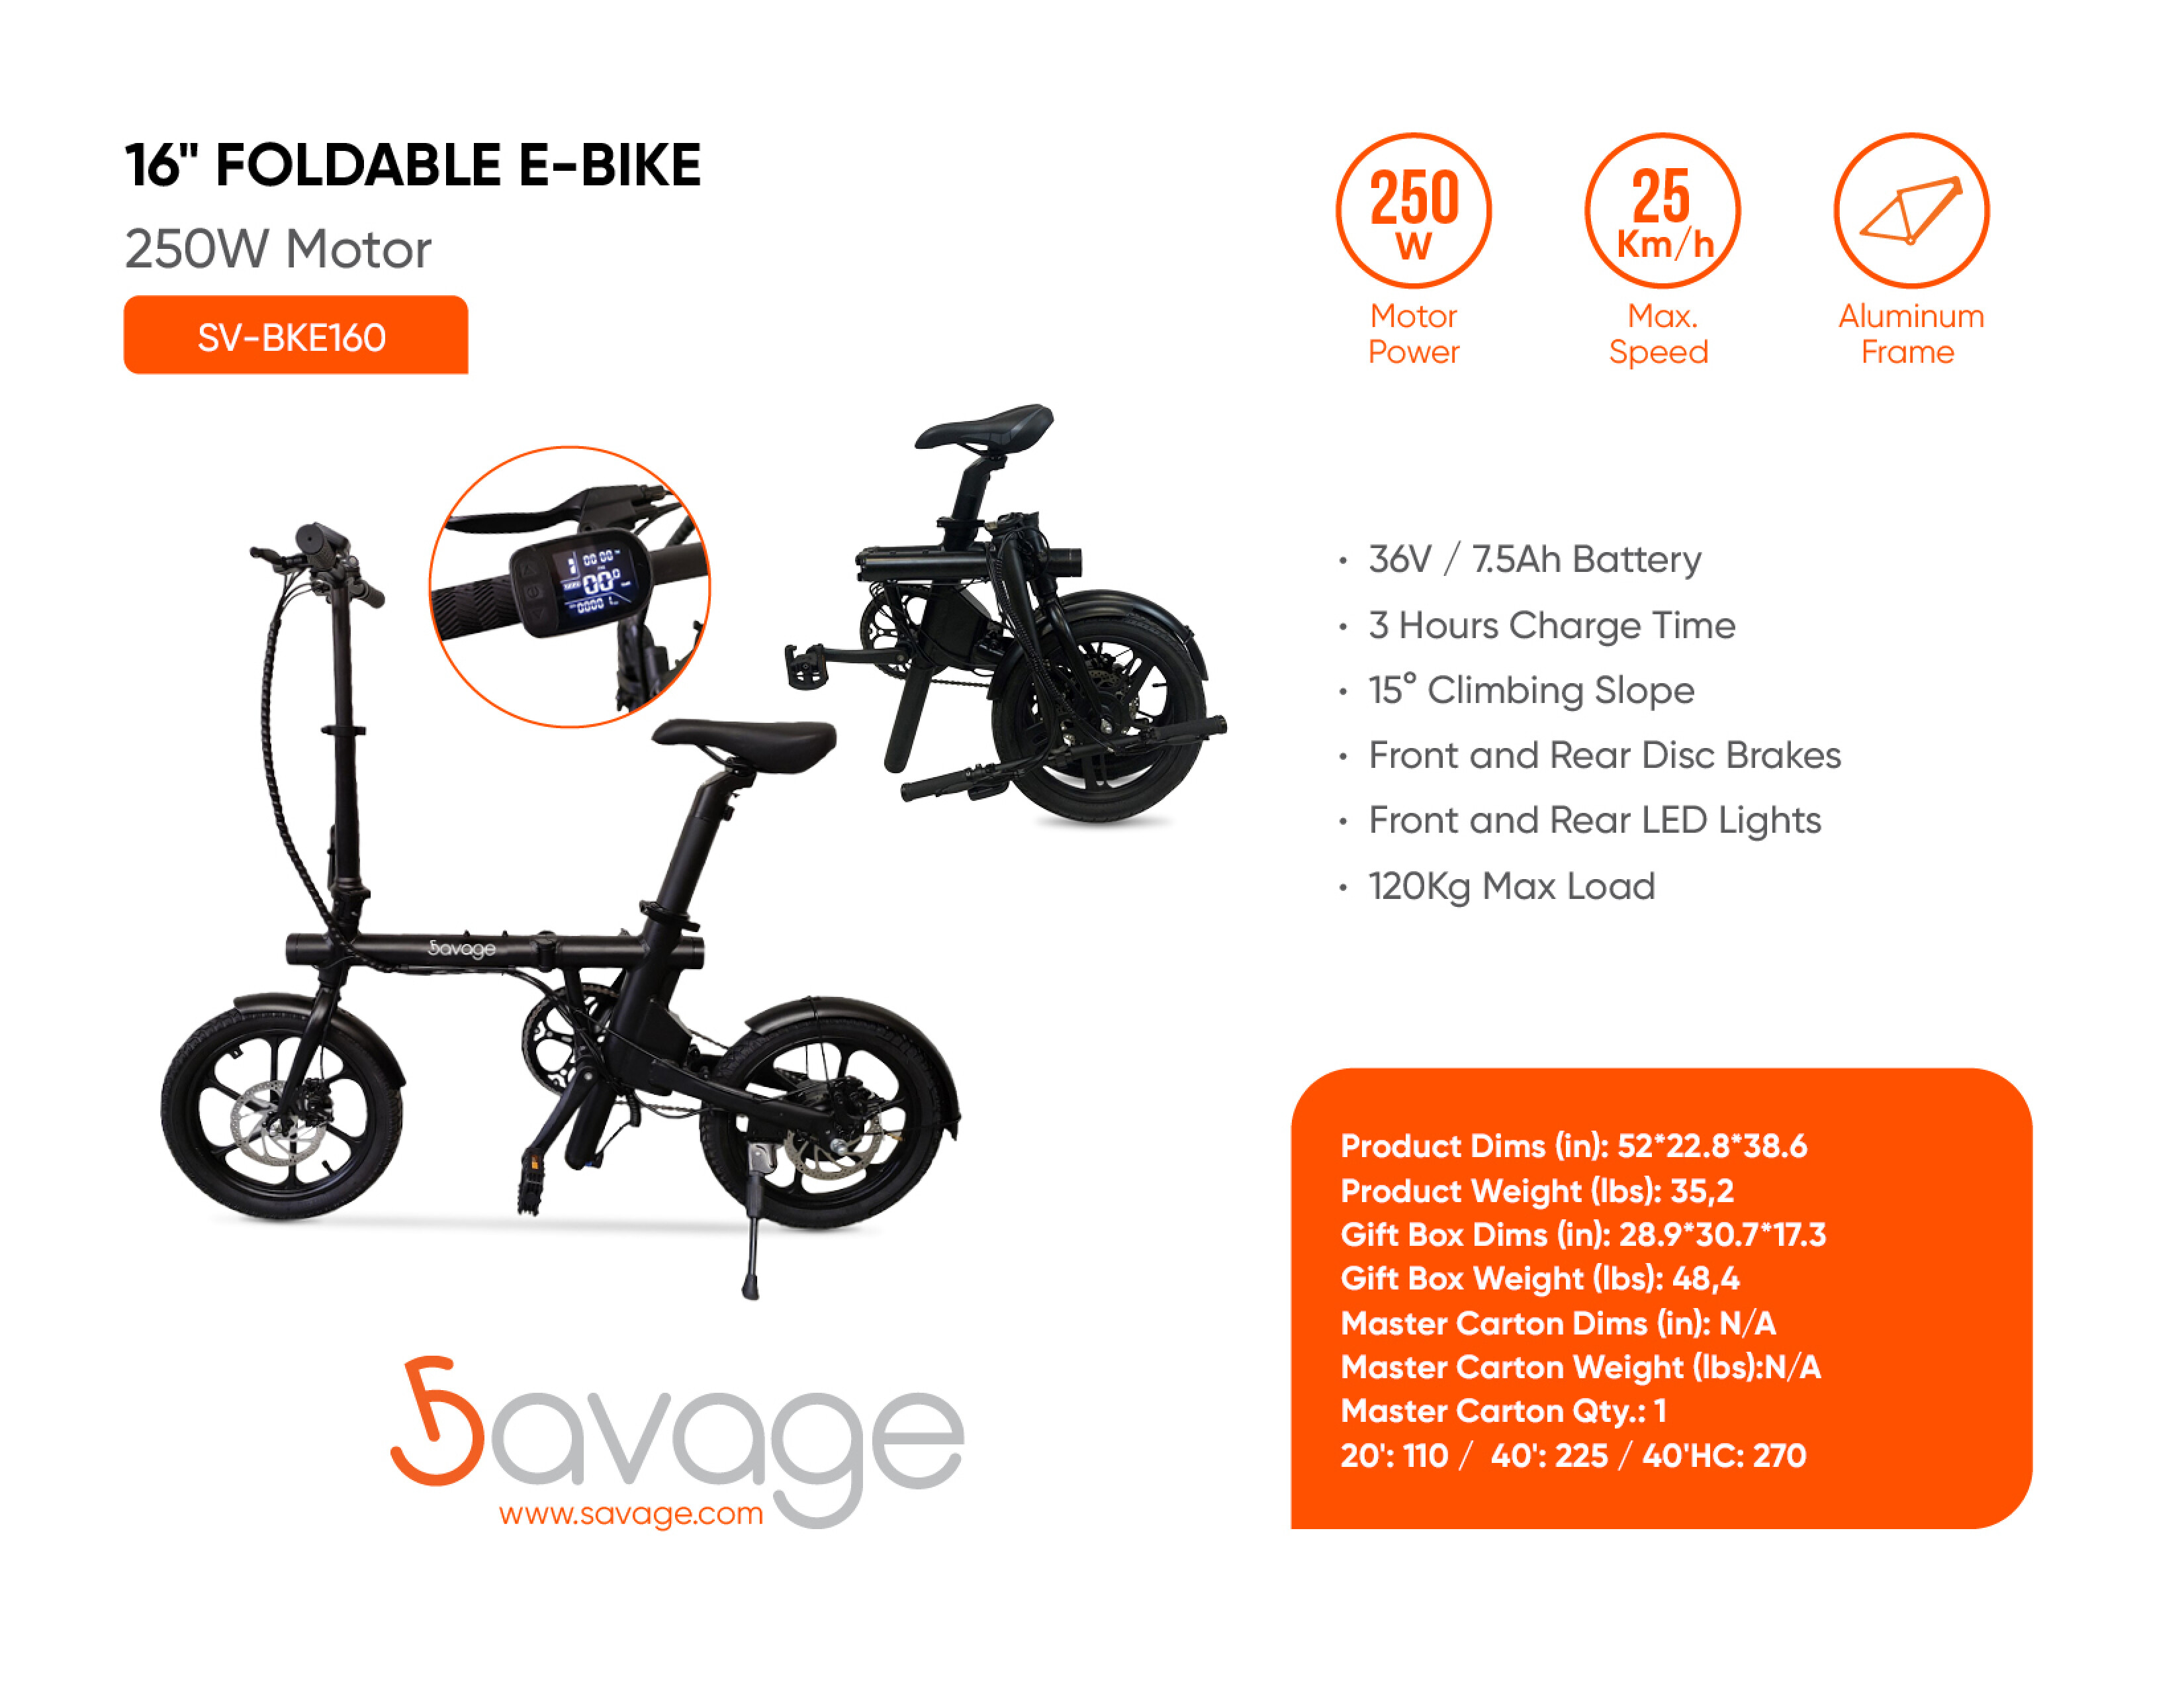 16" Foldable E-Bike